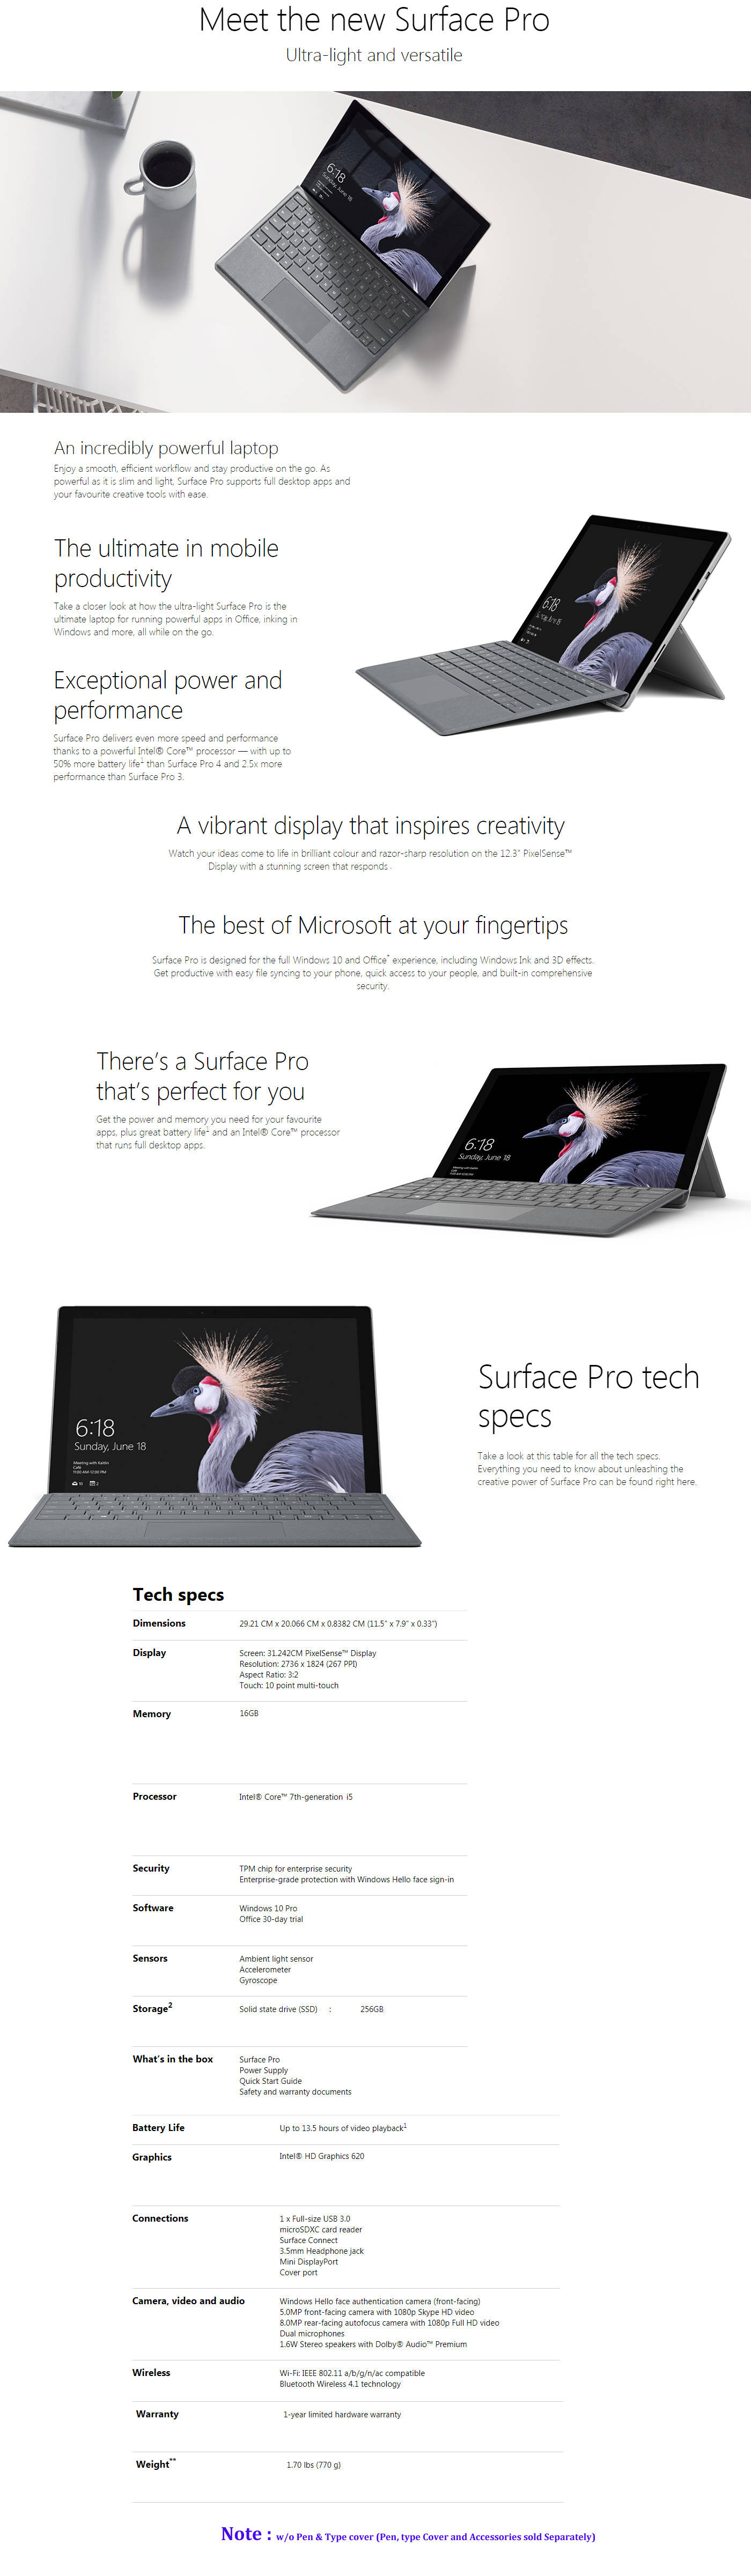  Buy Online Microsoft Surface Pro - HLN-00015 (Intel 7th Gen-Core i5, 16GB, 256GB SSD, 12.3inch Screen, Windows 10 Pro)